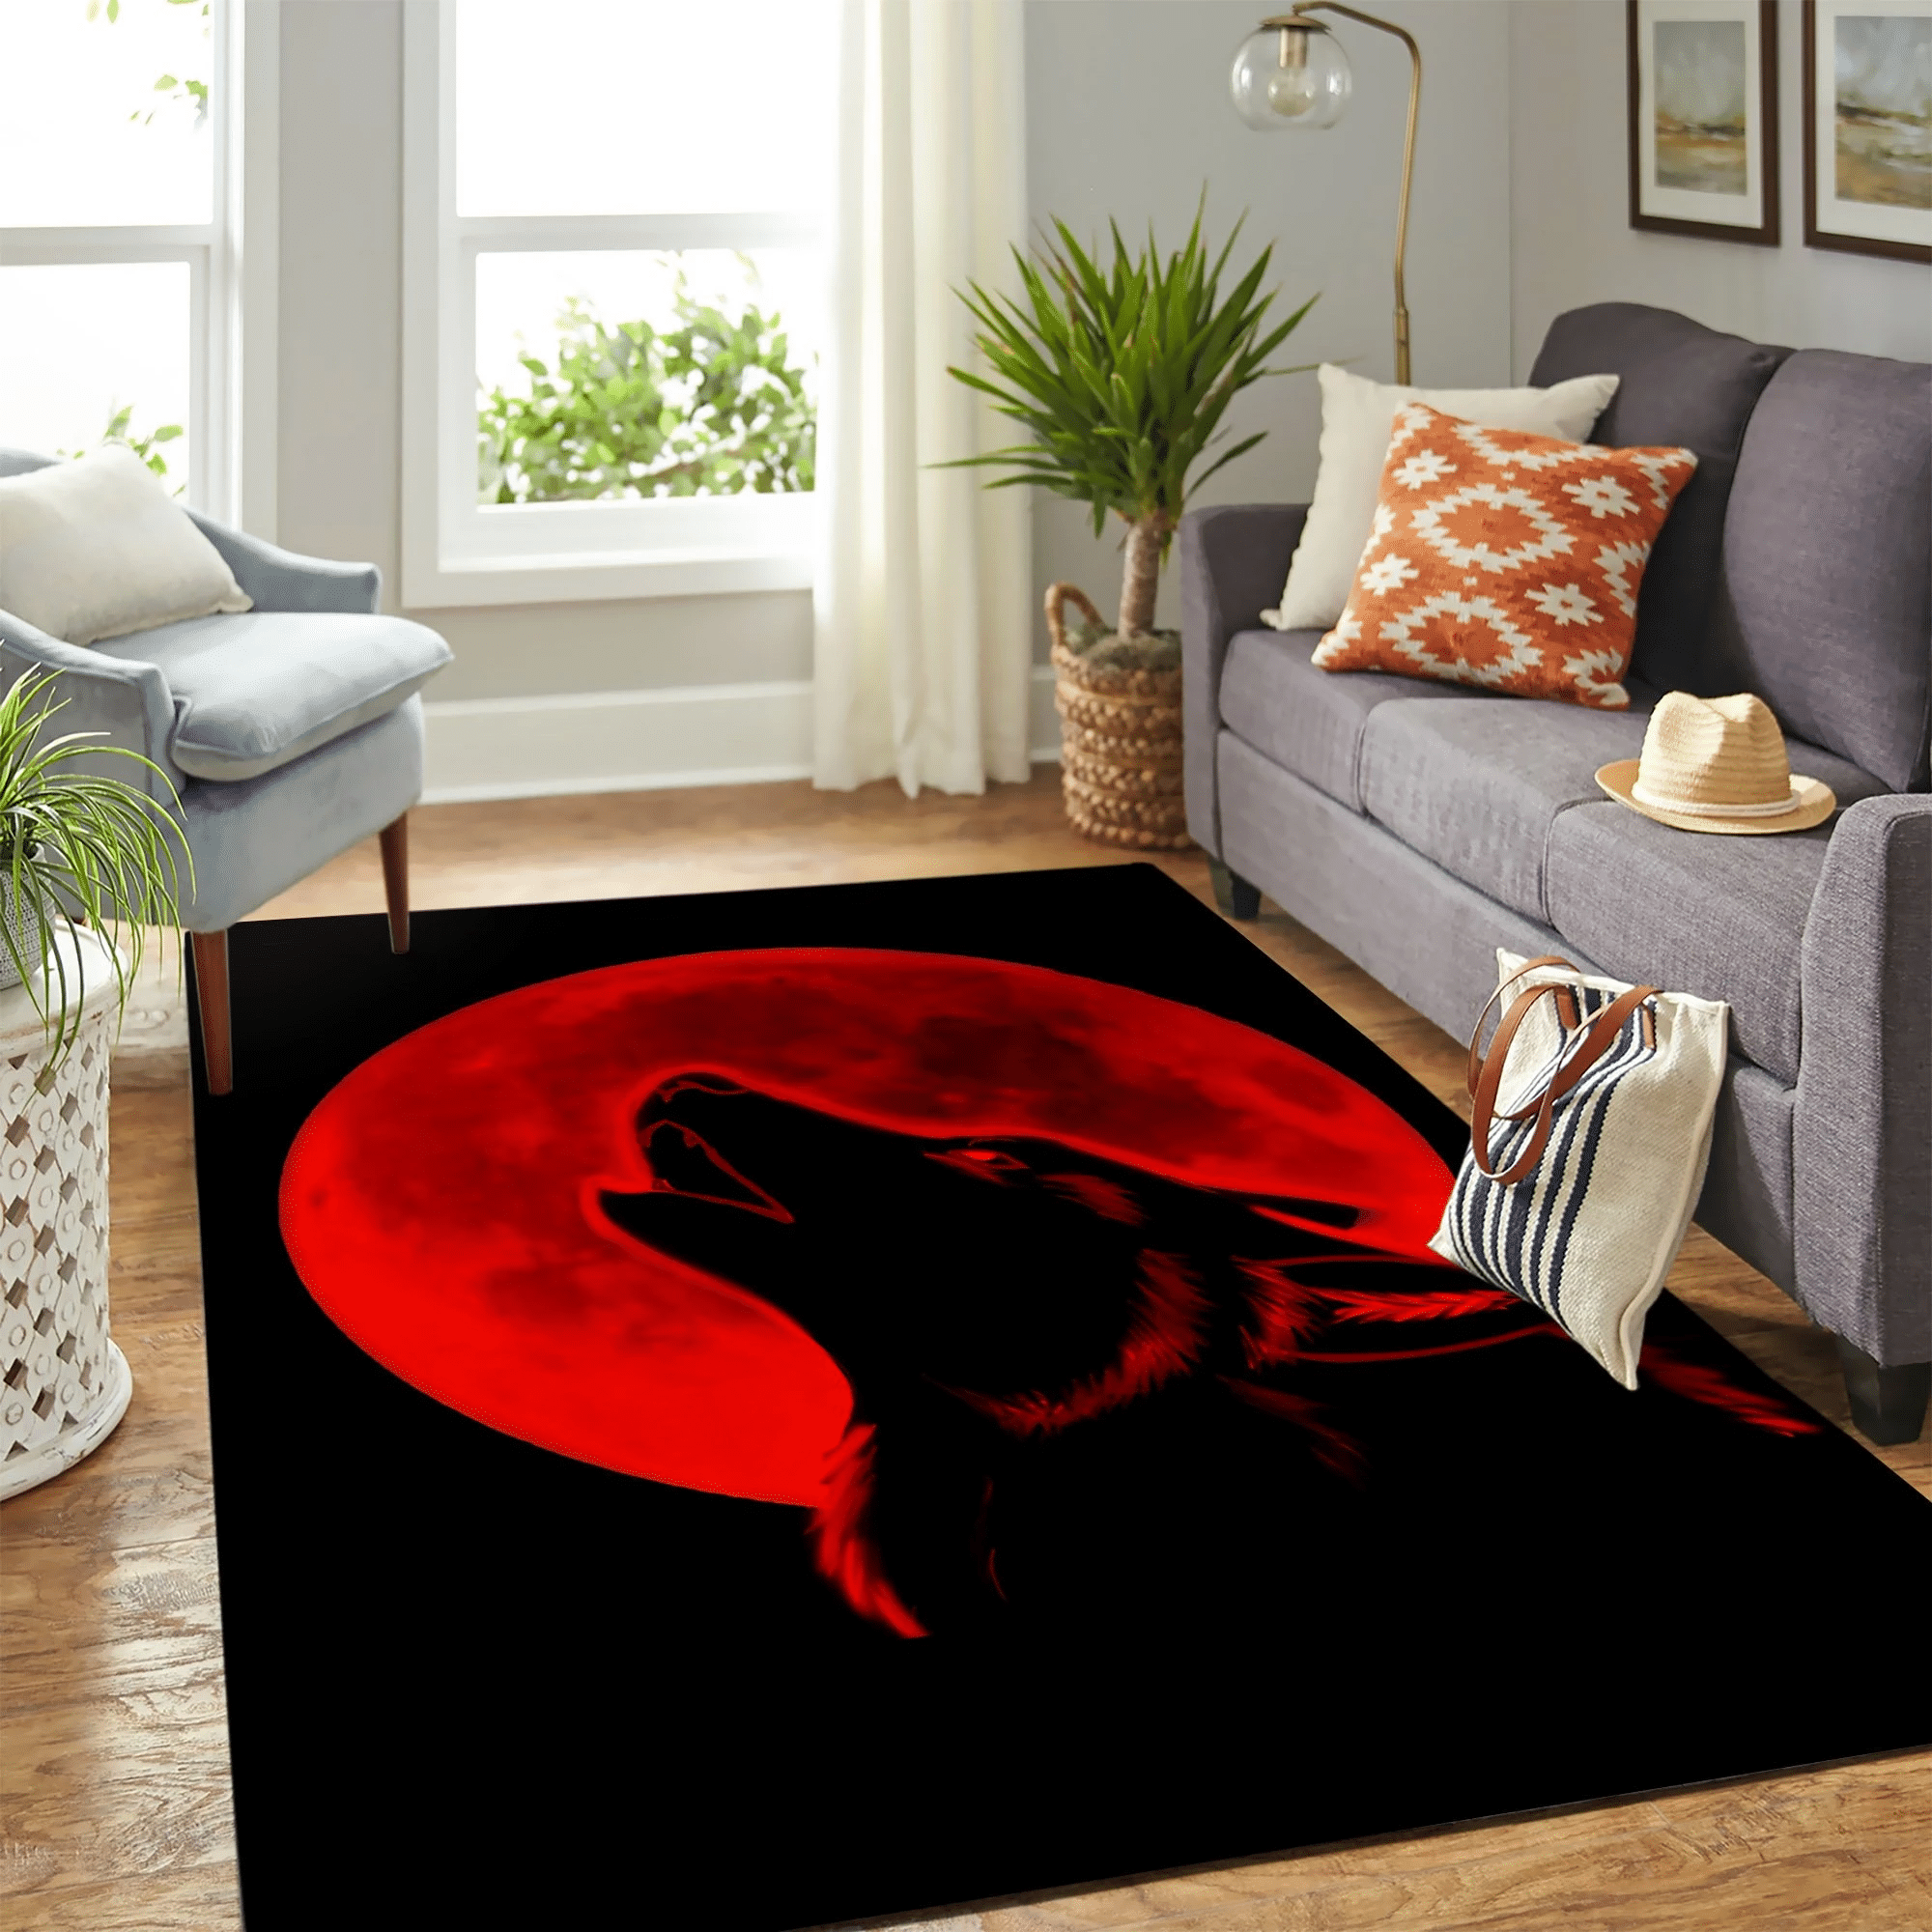 Red Moon Wolf Carpet Rug Chrismas Gift - Indoor Outdoor Rugs